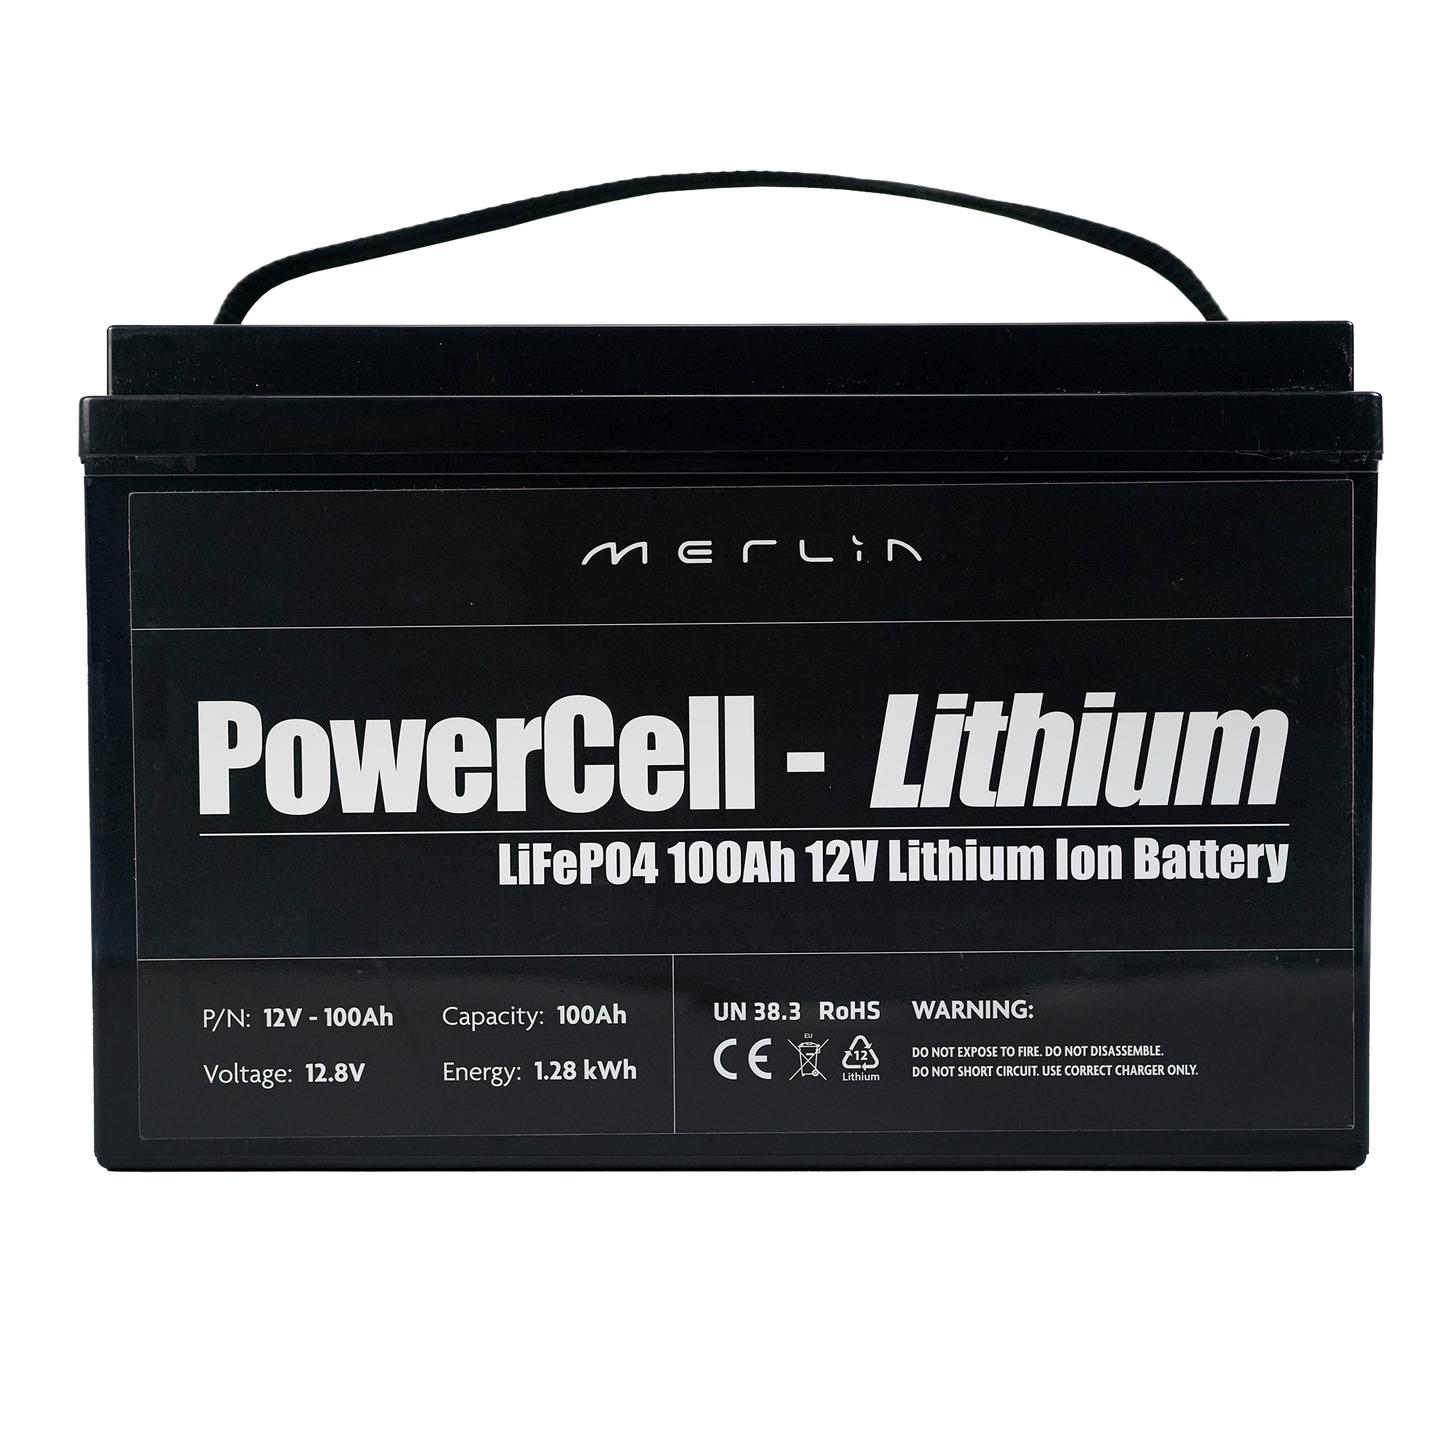 Merlin PowerCell 100Ah Lithium